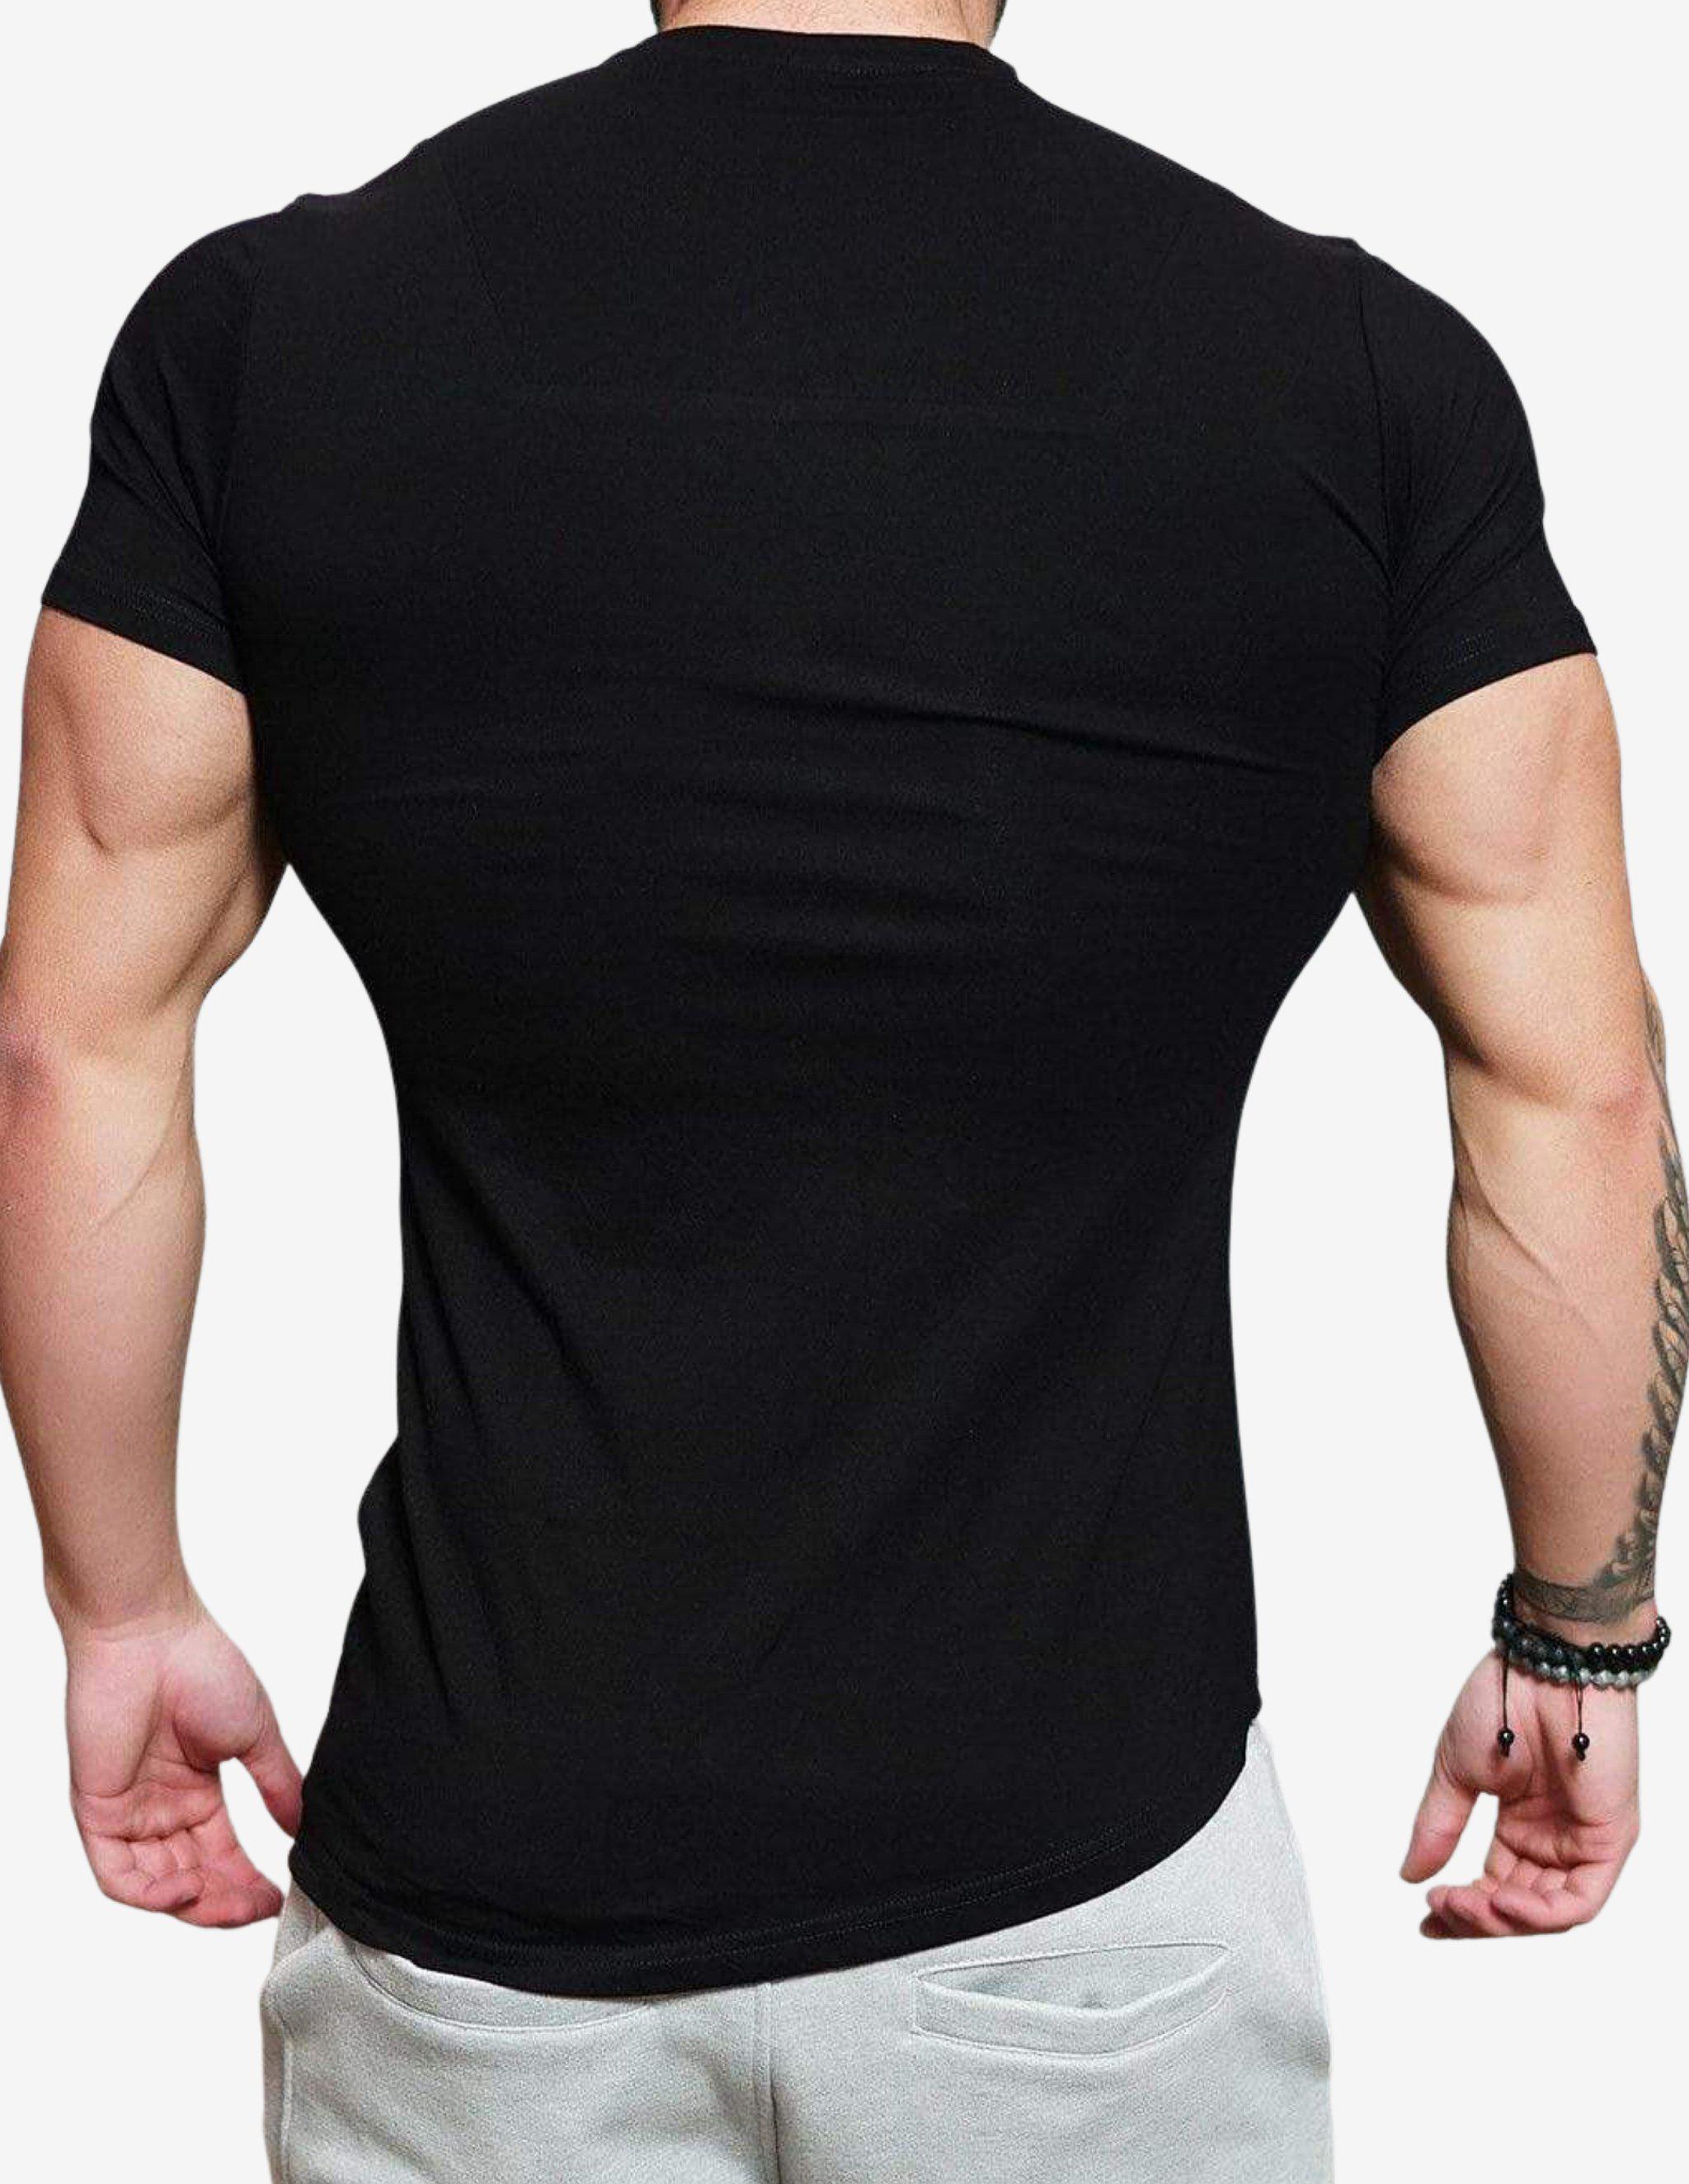 Engineered Life Black Shirt, Body Engineers